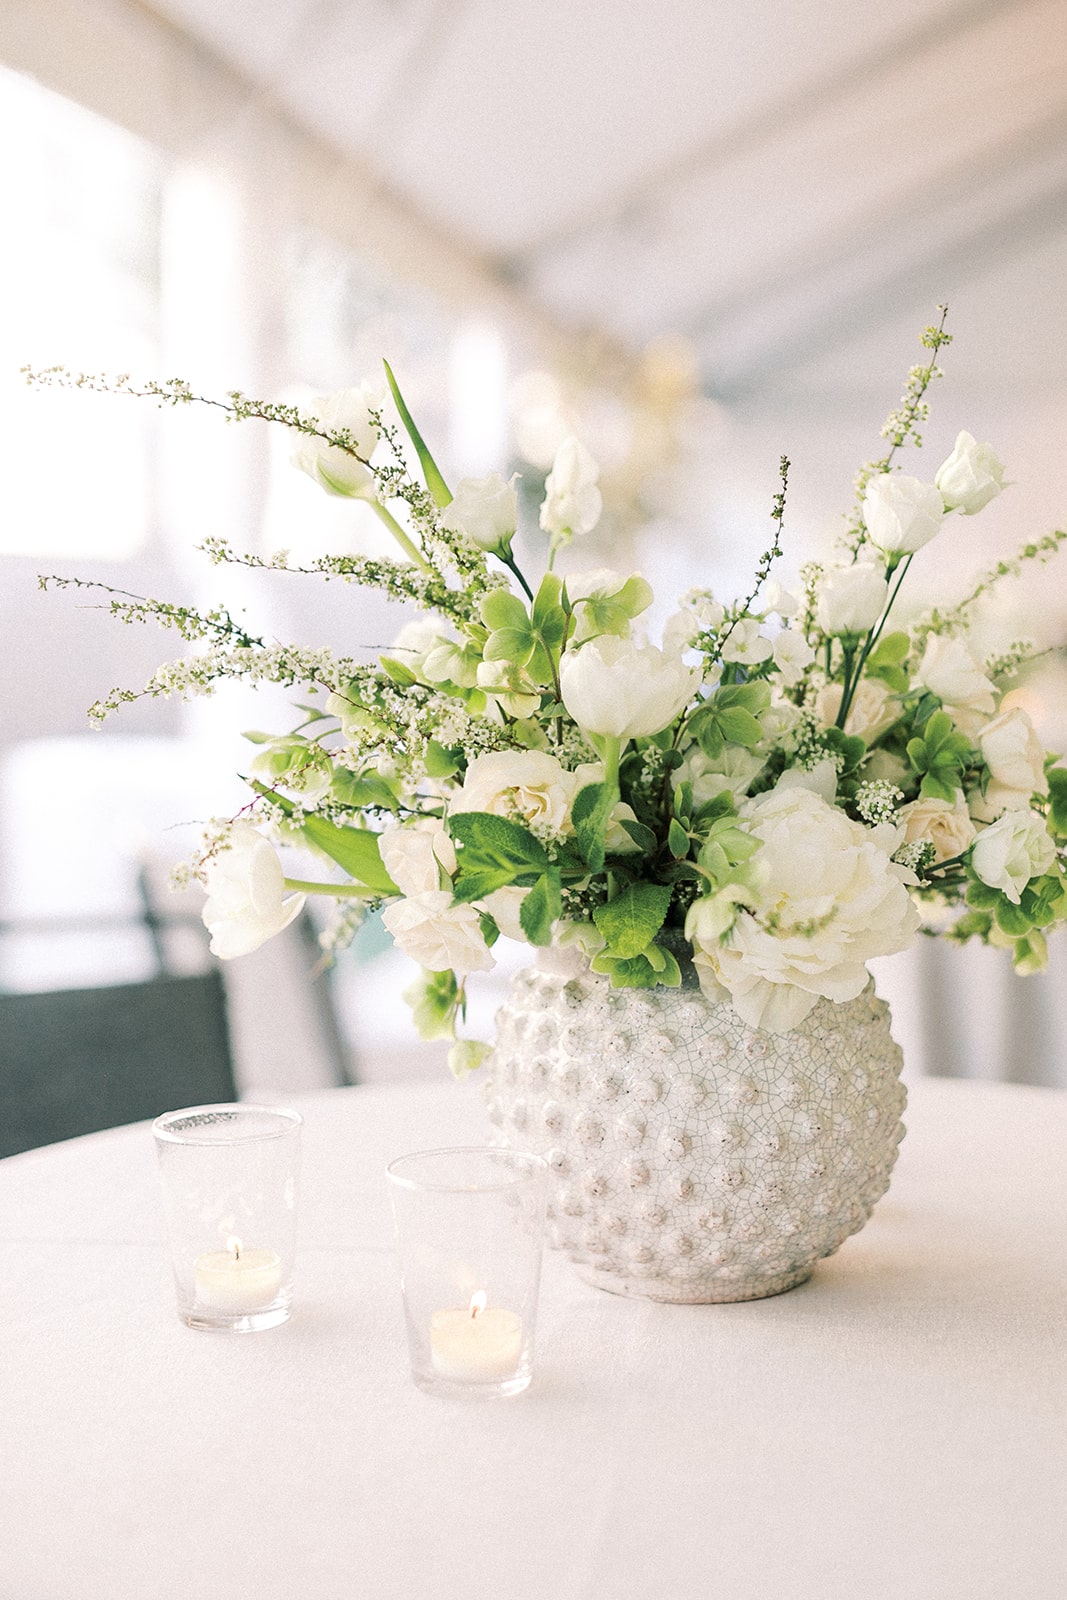 White wedding flowers in round ceramic vase